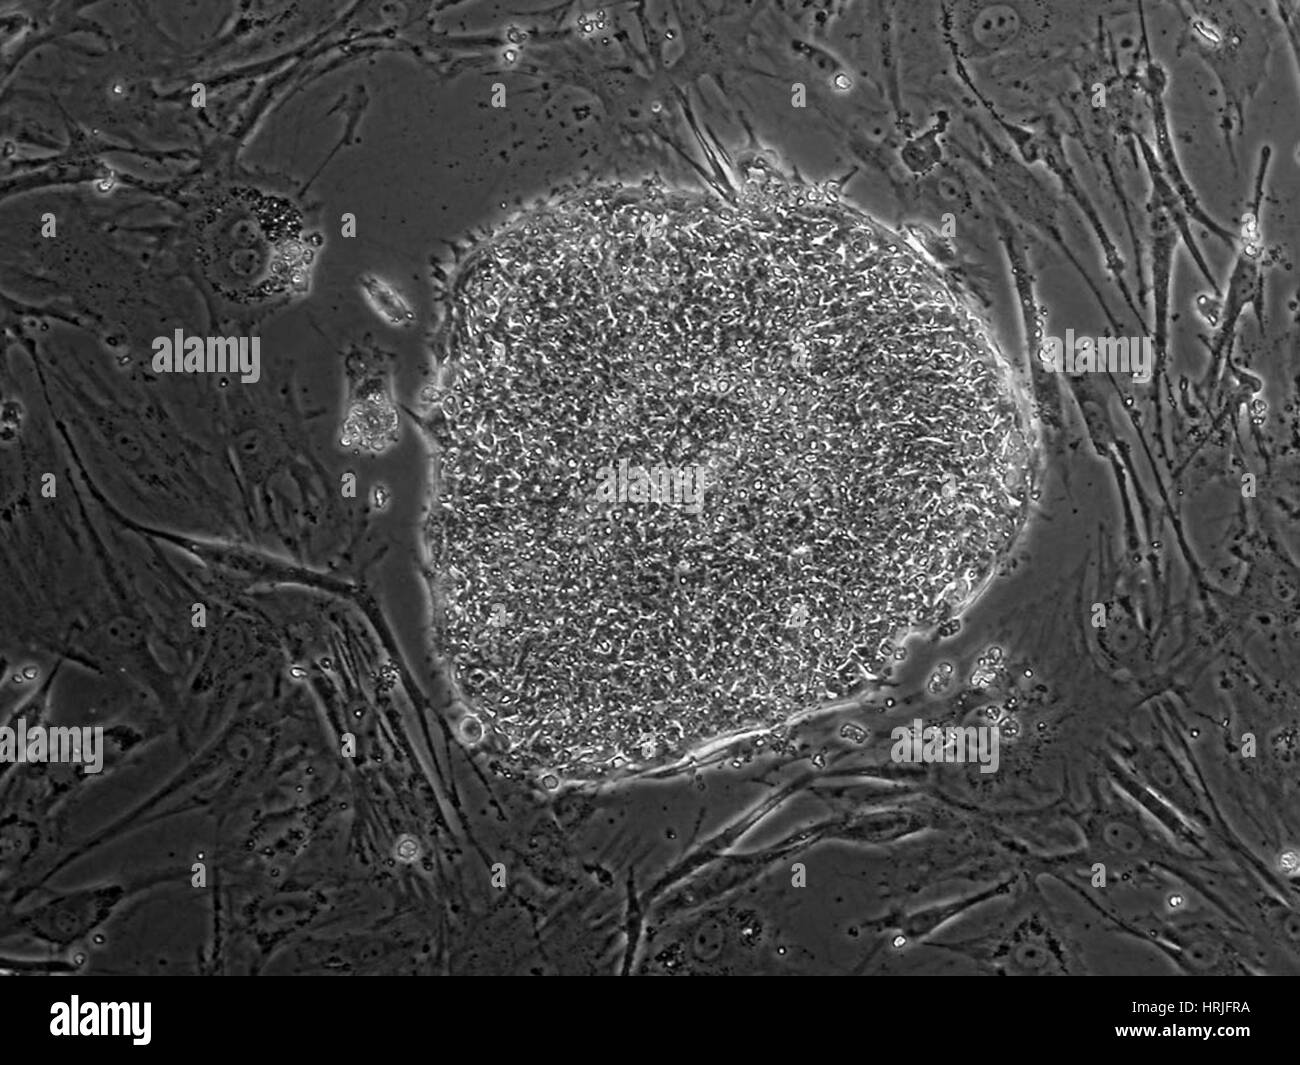 Human Embryonic Stem Cell Line BG03 Stock Photo